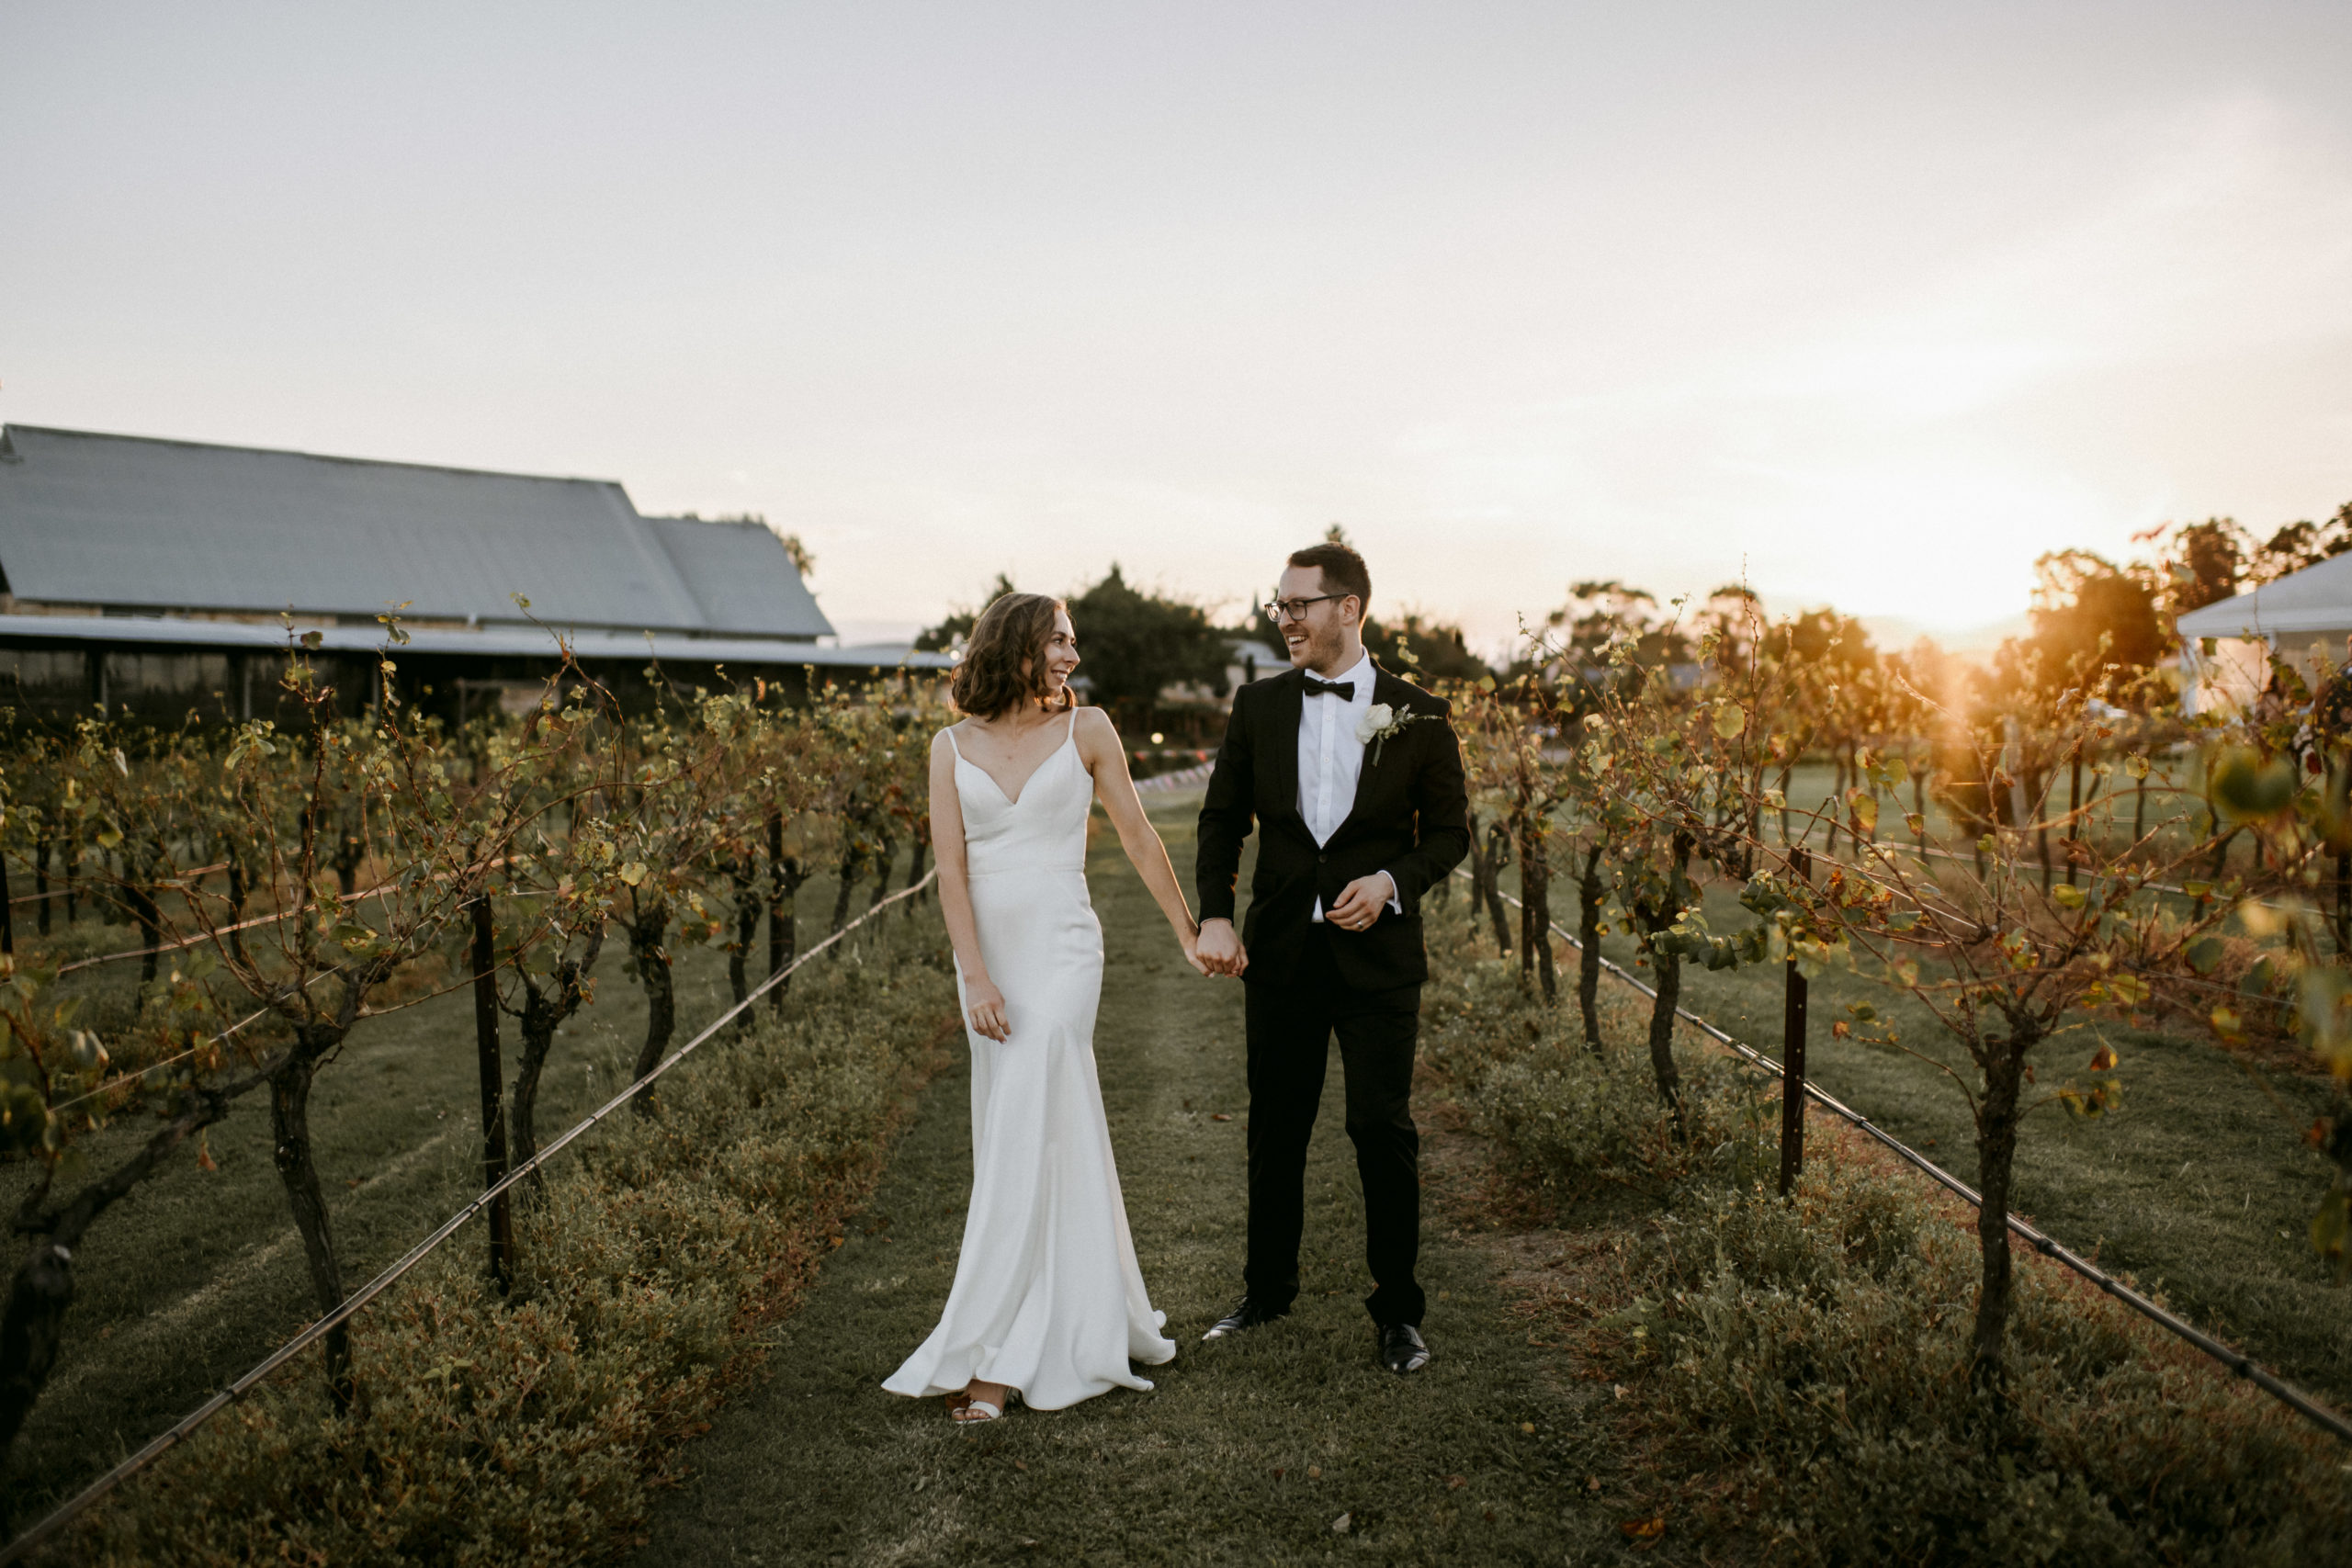 Hunter Valley Wedding at Sunset, winery wedding photos